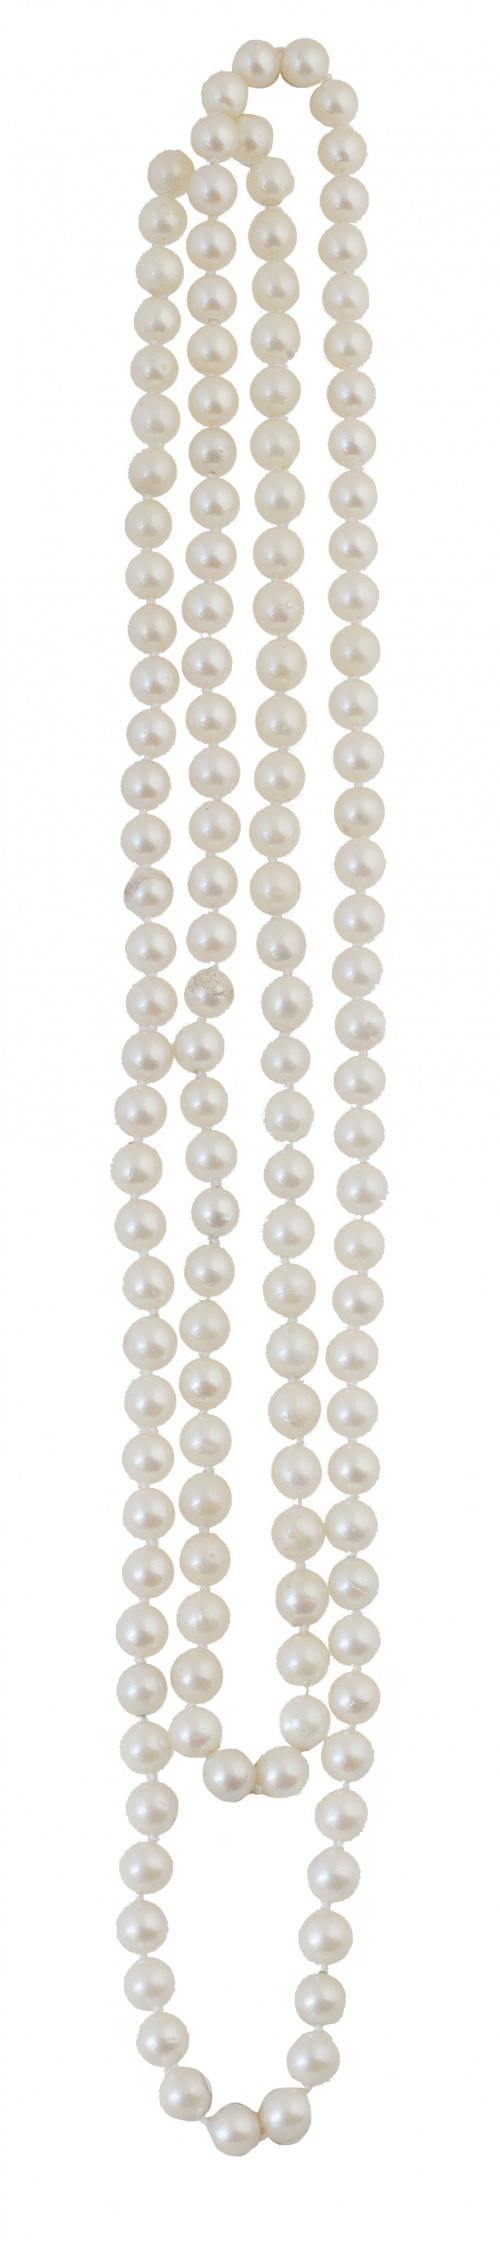 Collar largo de un hilo de perlas de 7,5 mm de diametro